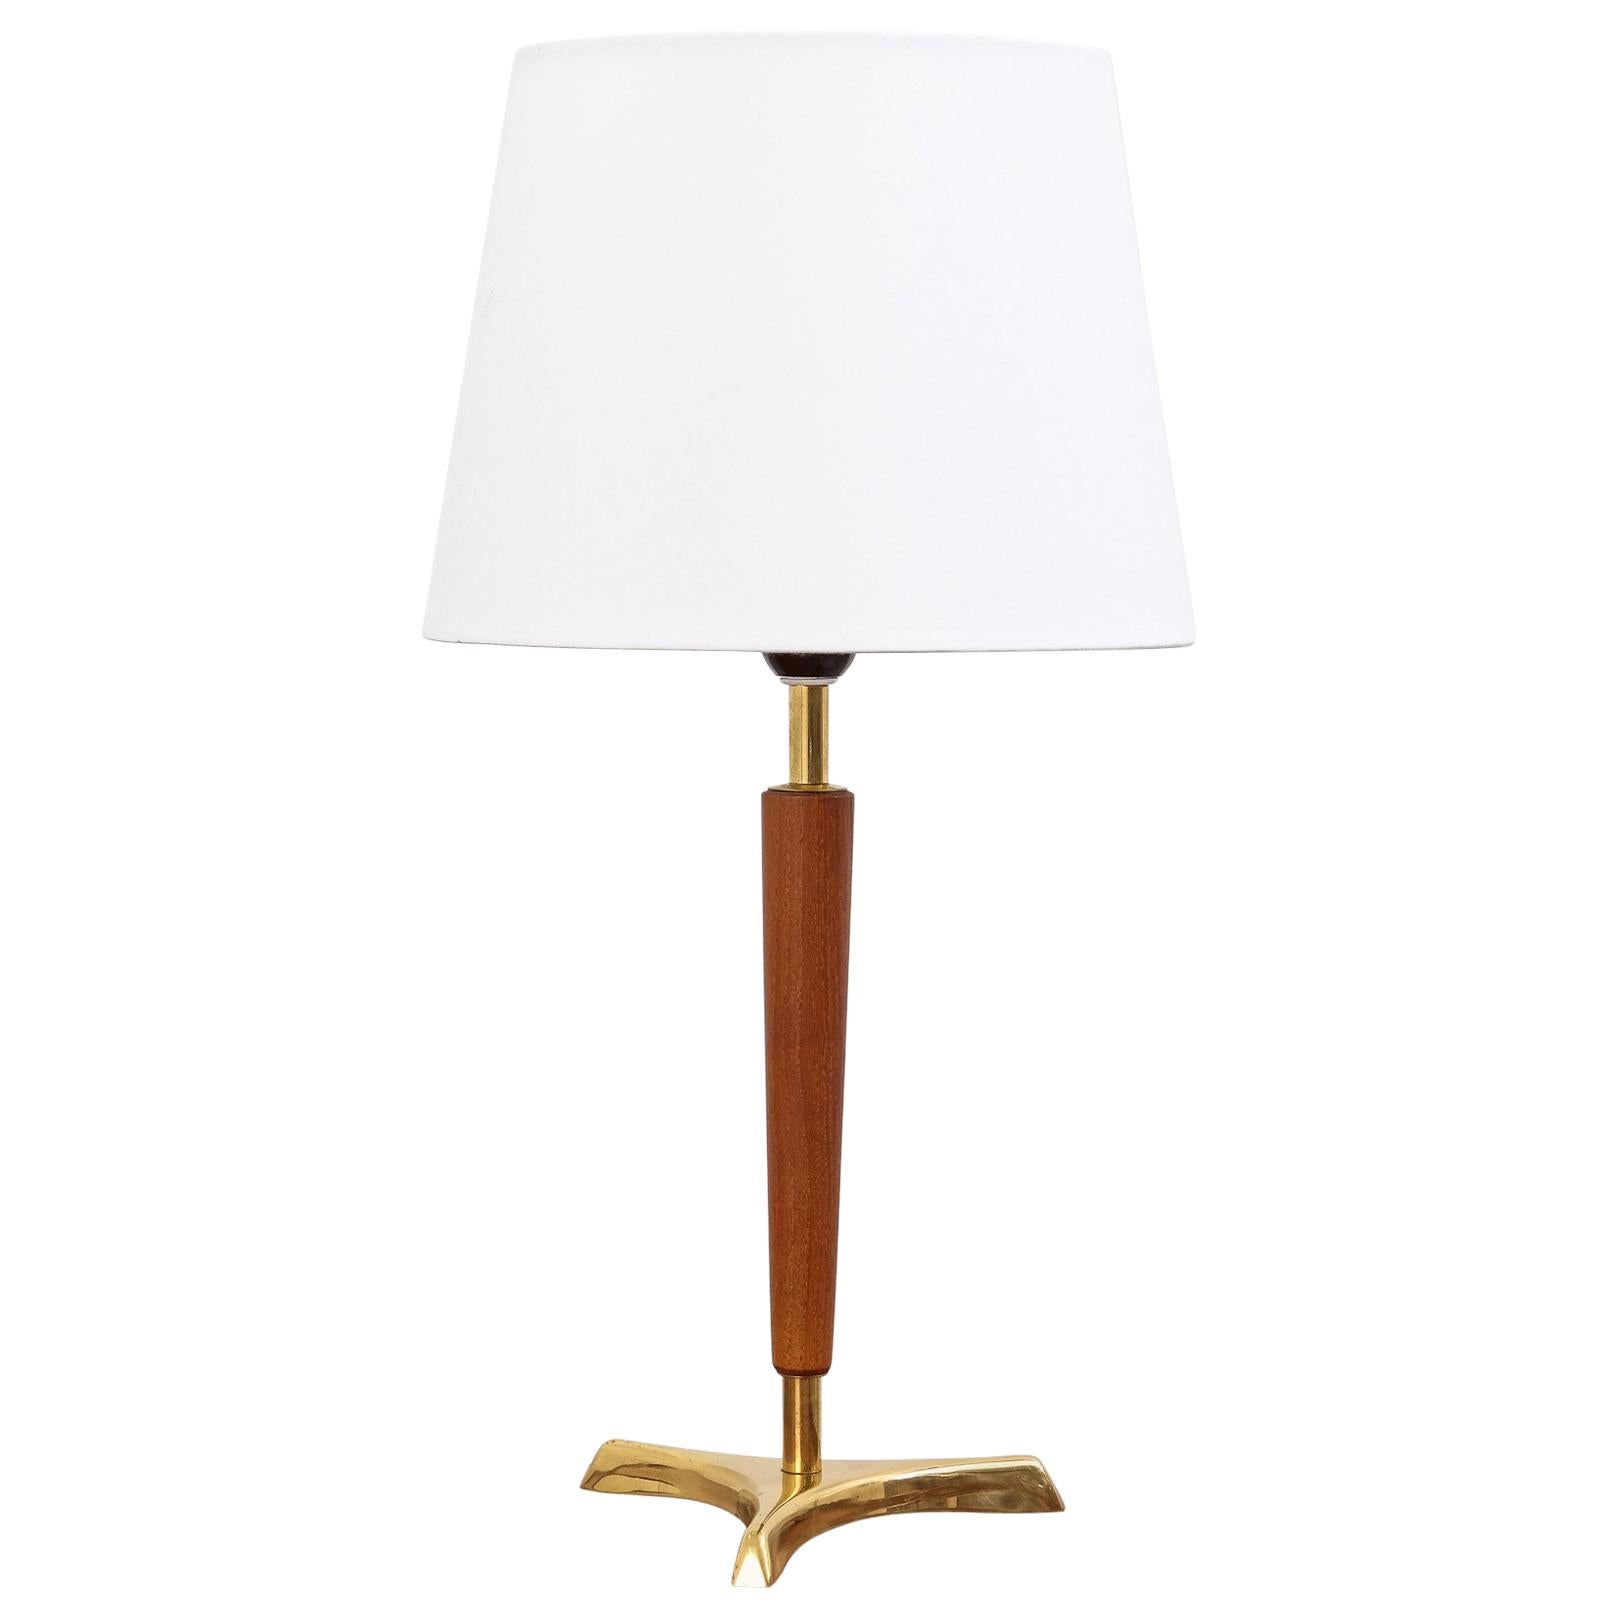 1950s Scandinavian Brass and Teak Table Lamp